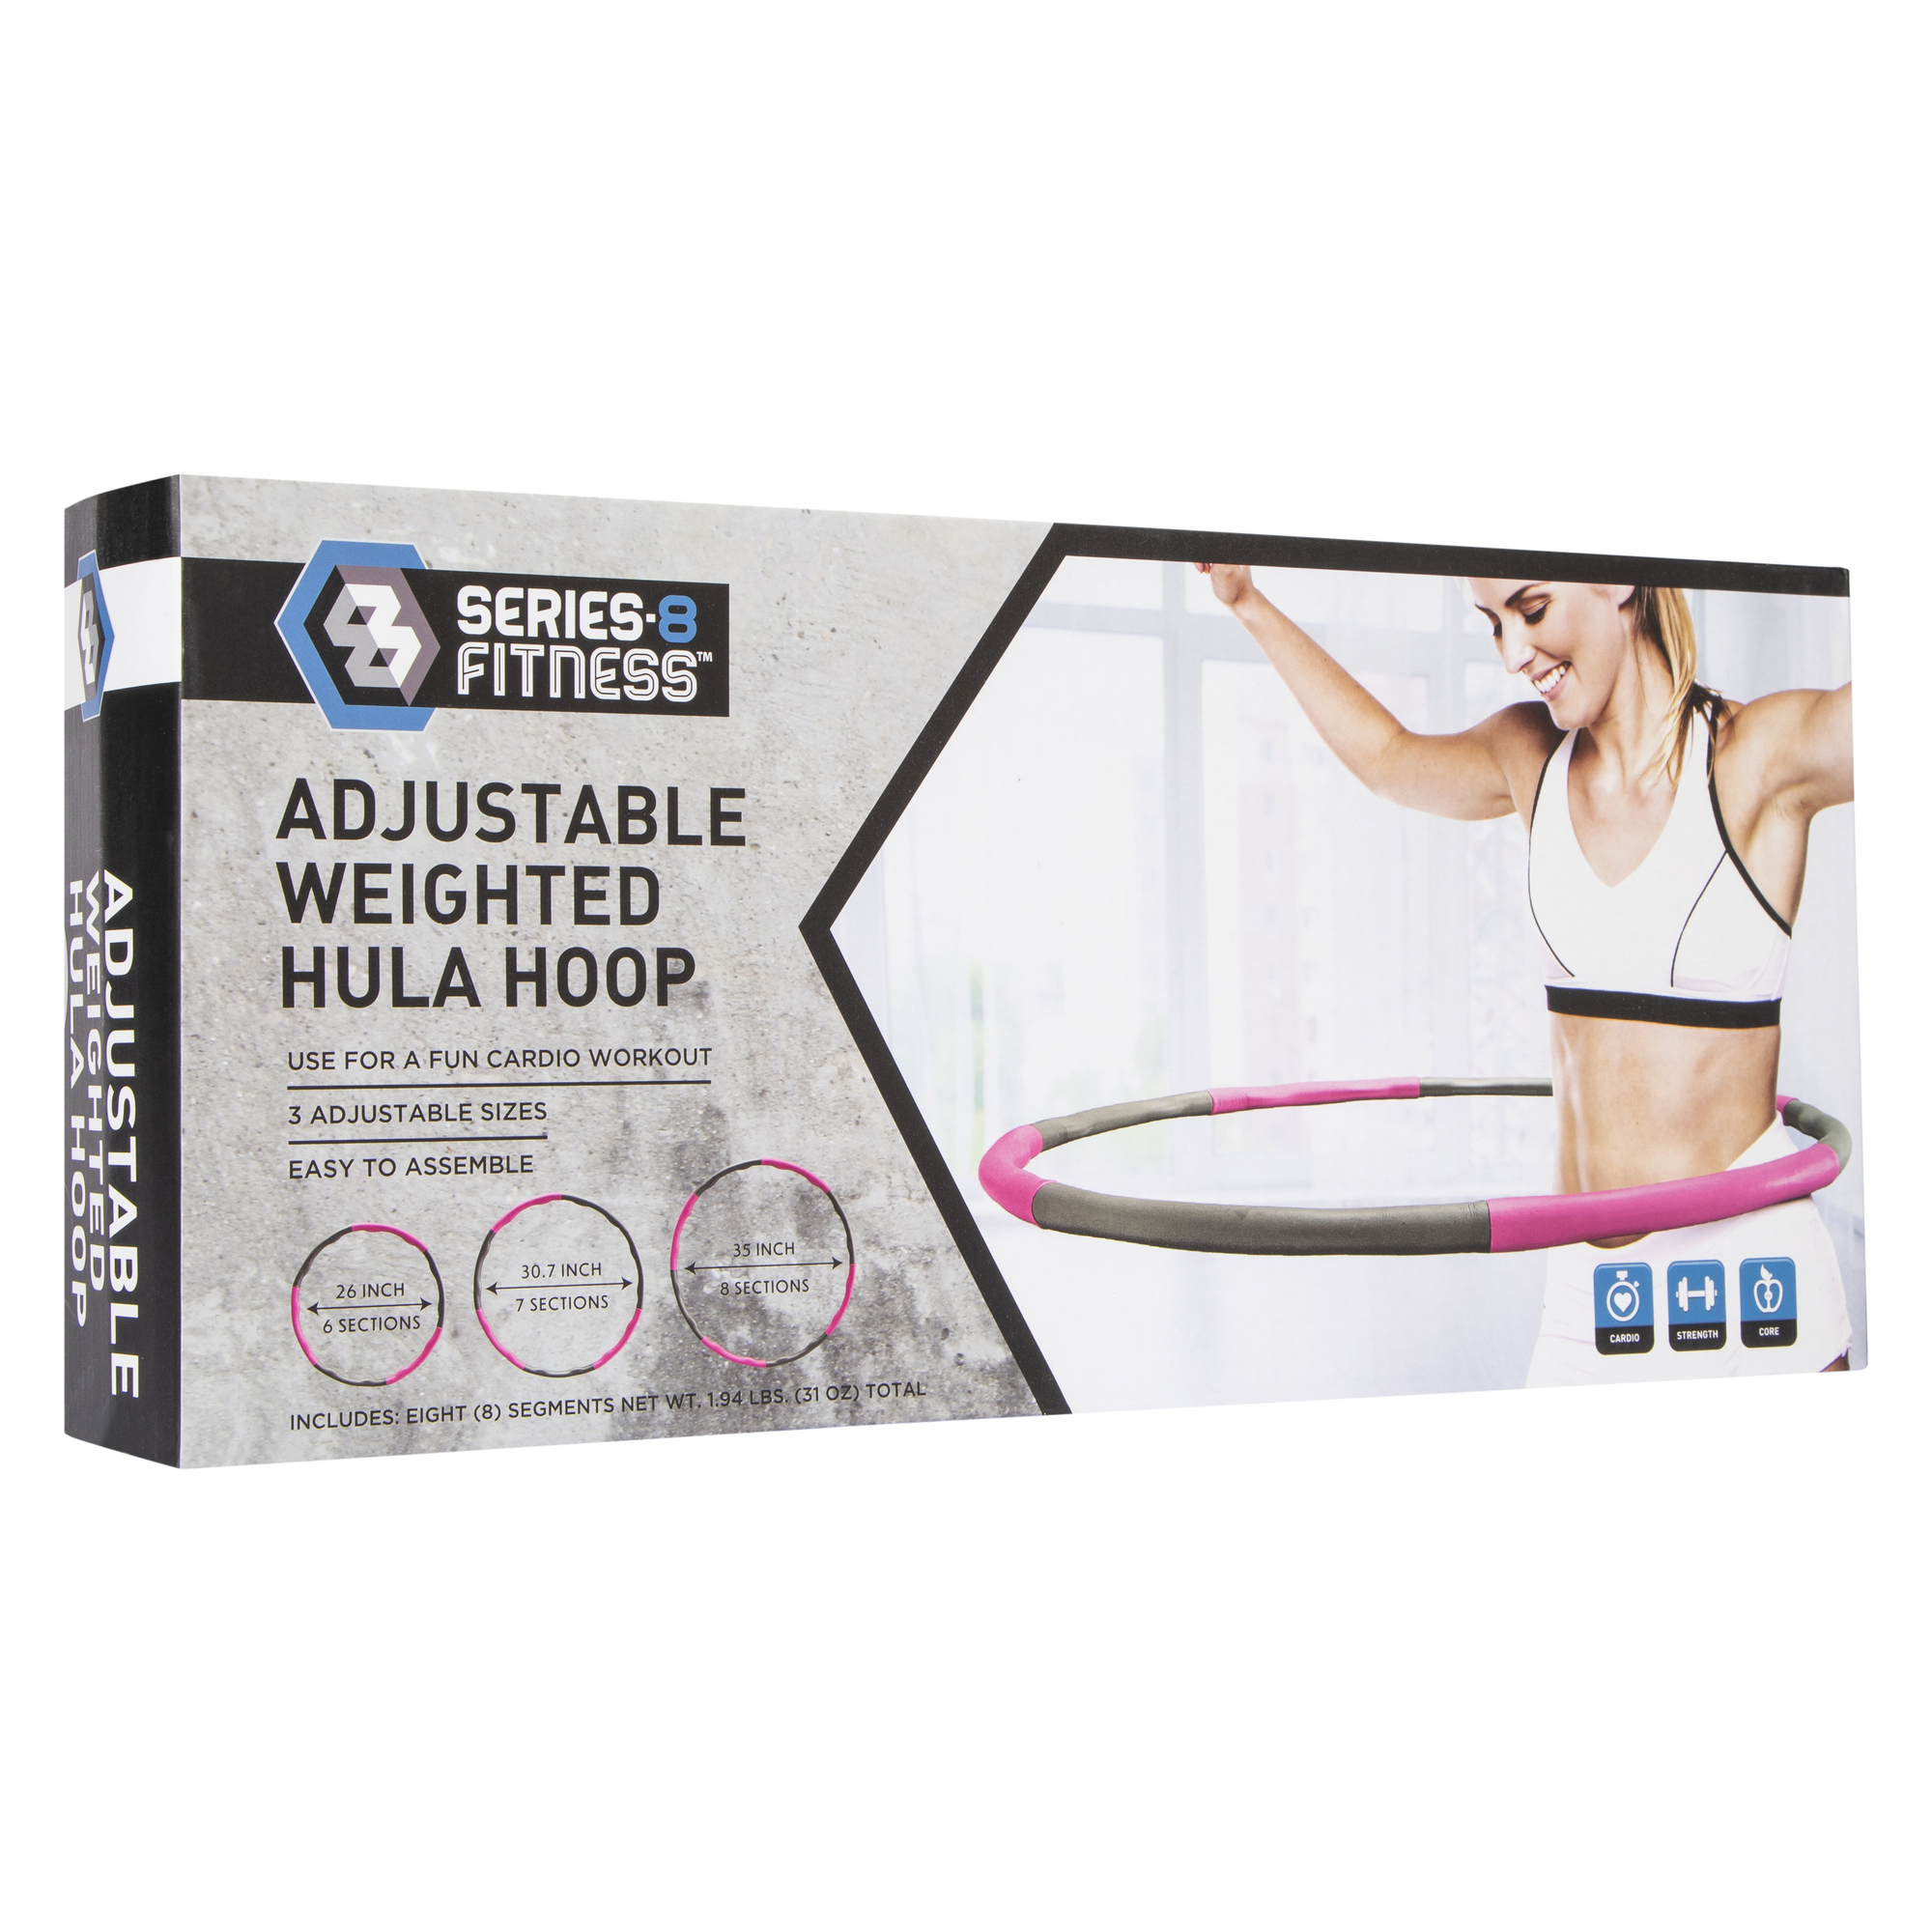 series-8 fitness™ adjustable weighted hula hoop